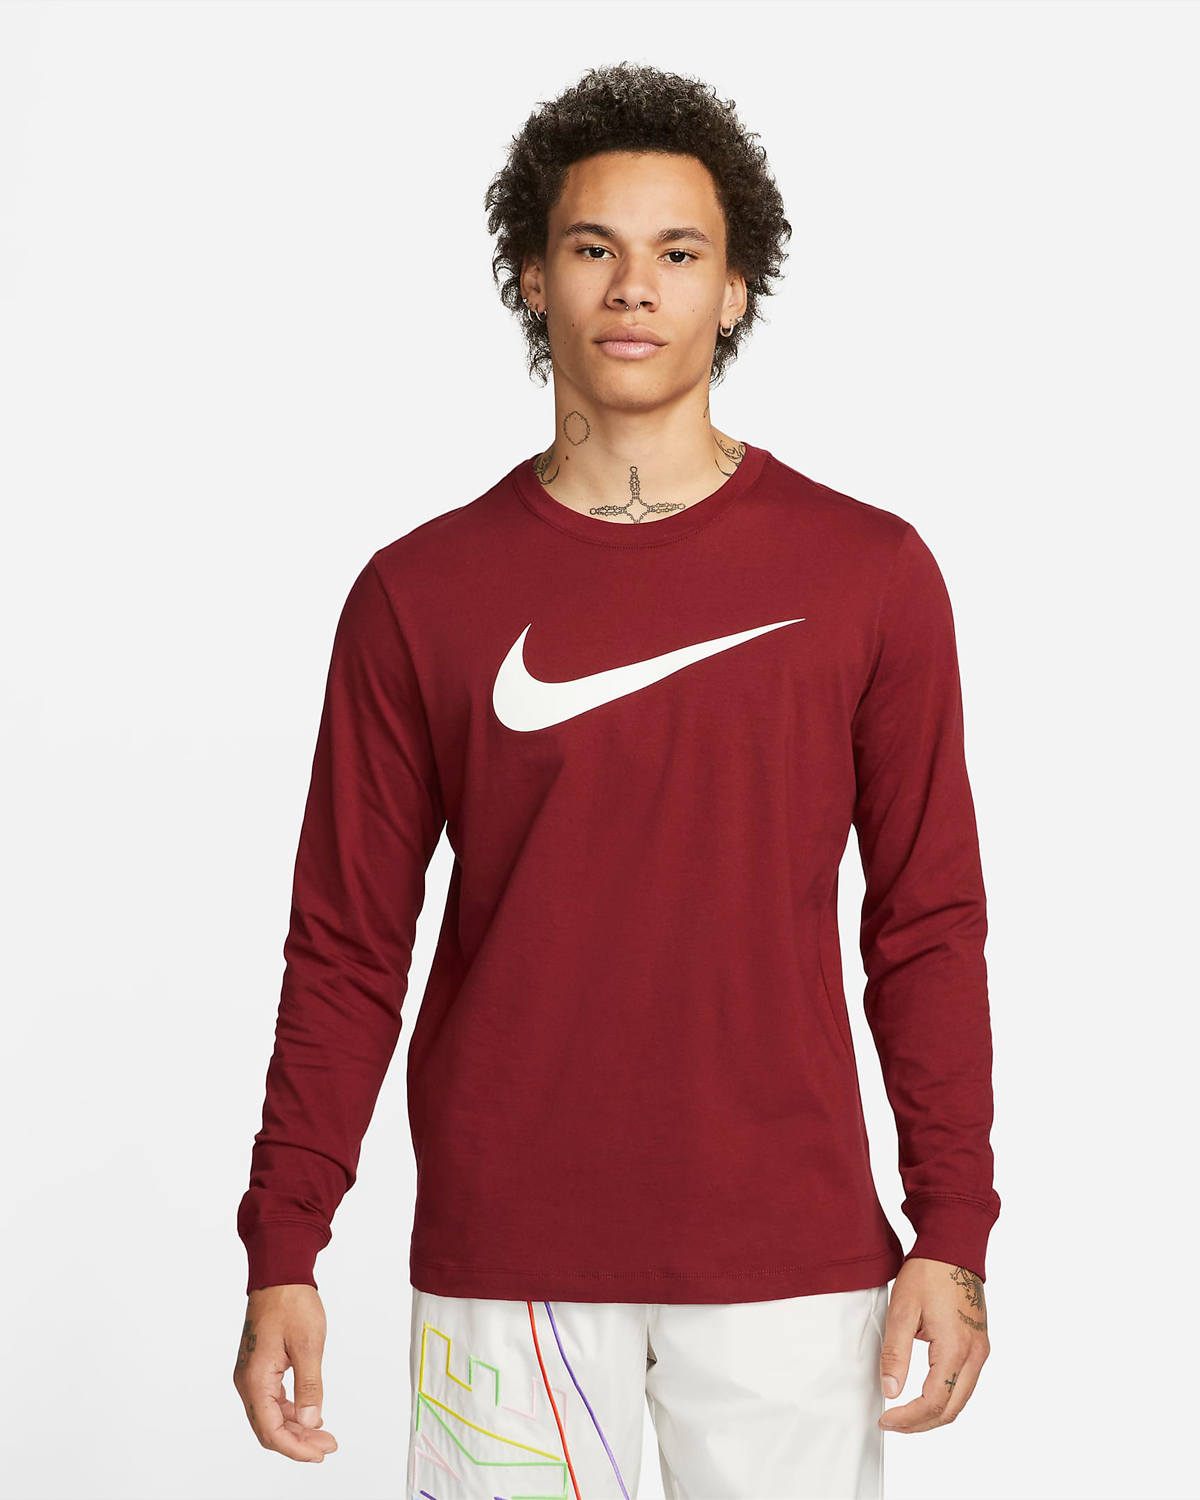 Nike-Sportswear-Long-Sleeve-T-Shirt-Team-Red